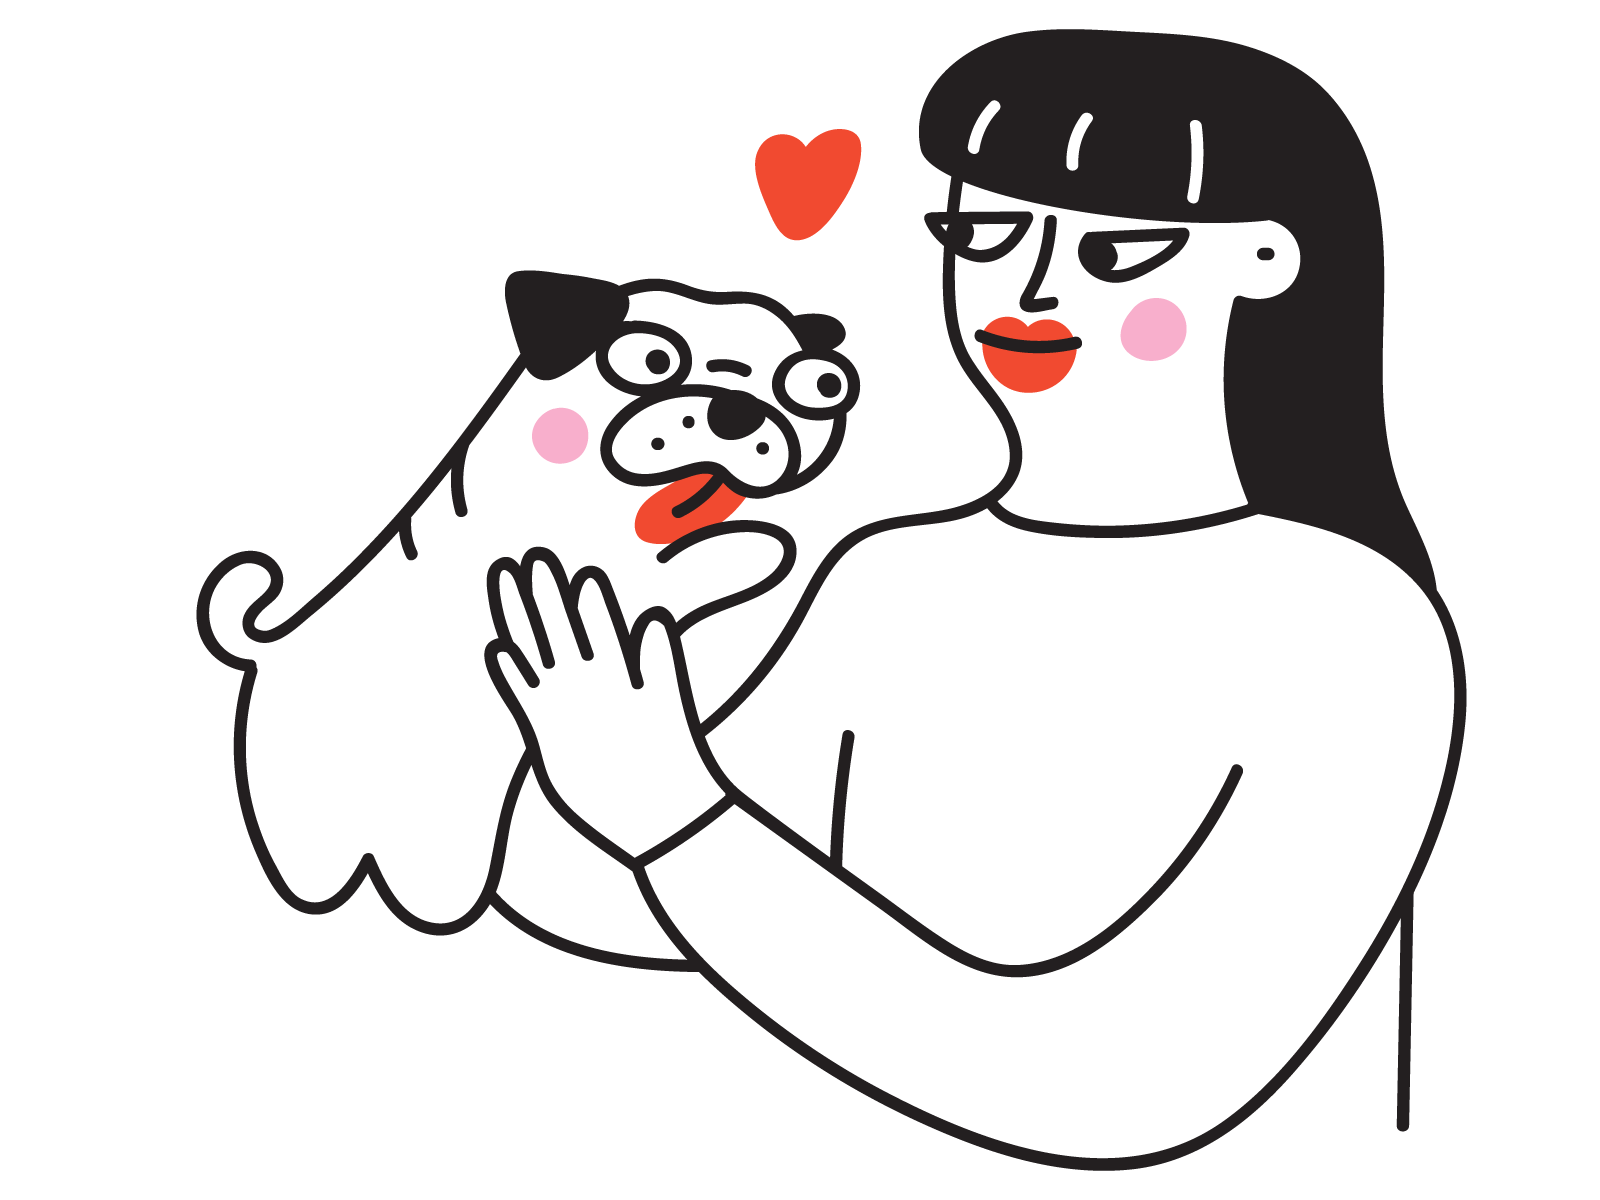 Lady and pug